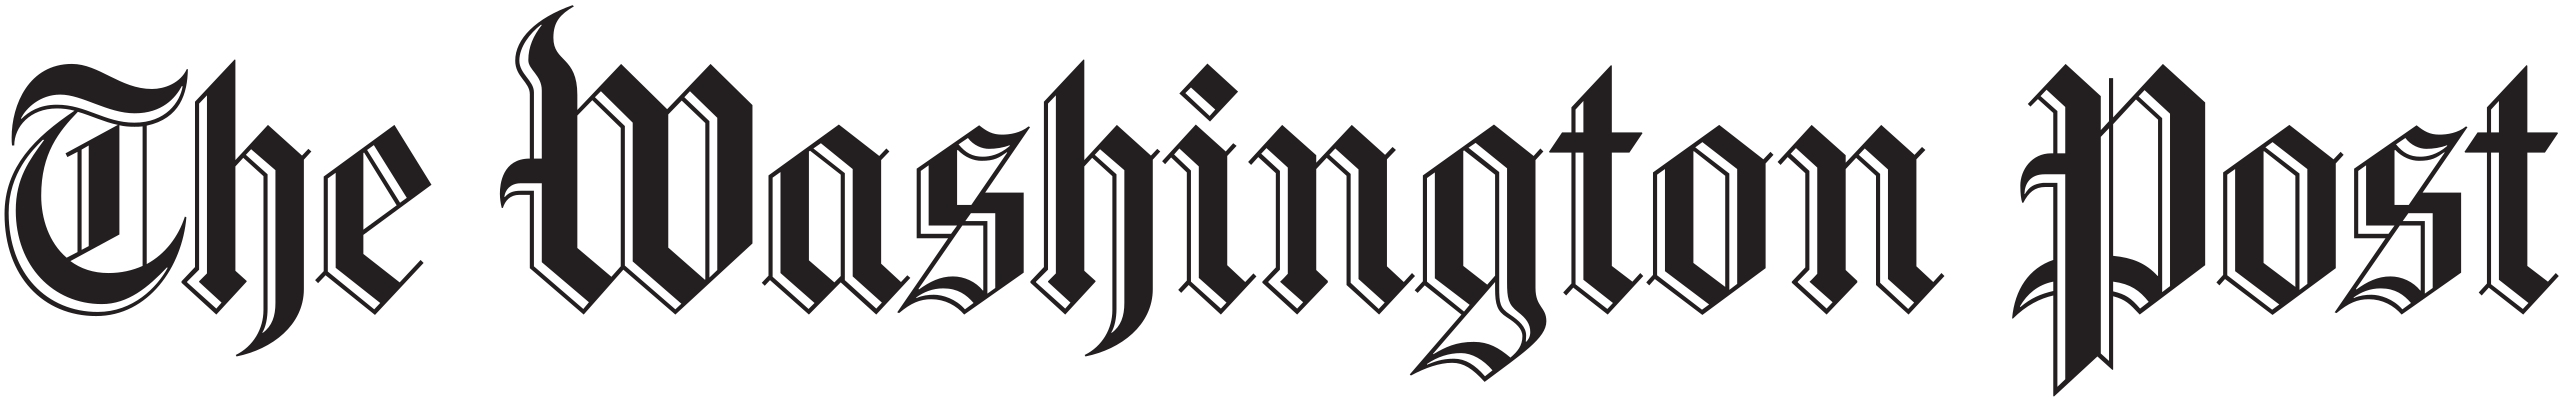 2560px-The_Logo_of_The_Washington_Post_Newspaper.svg